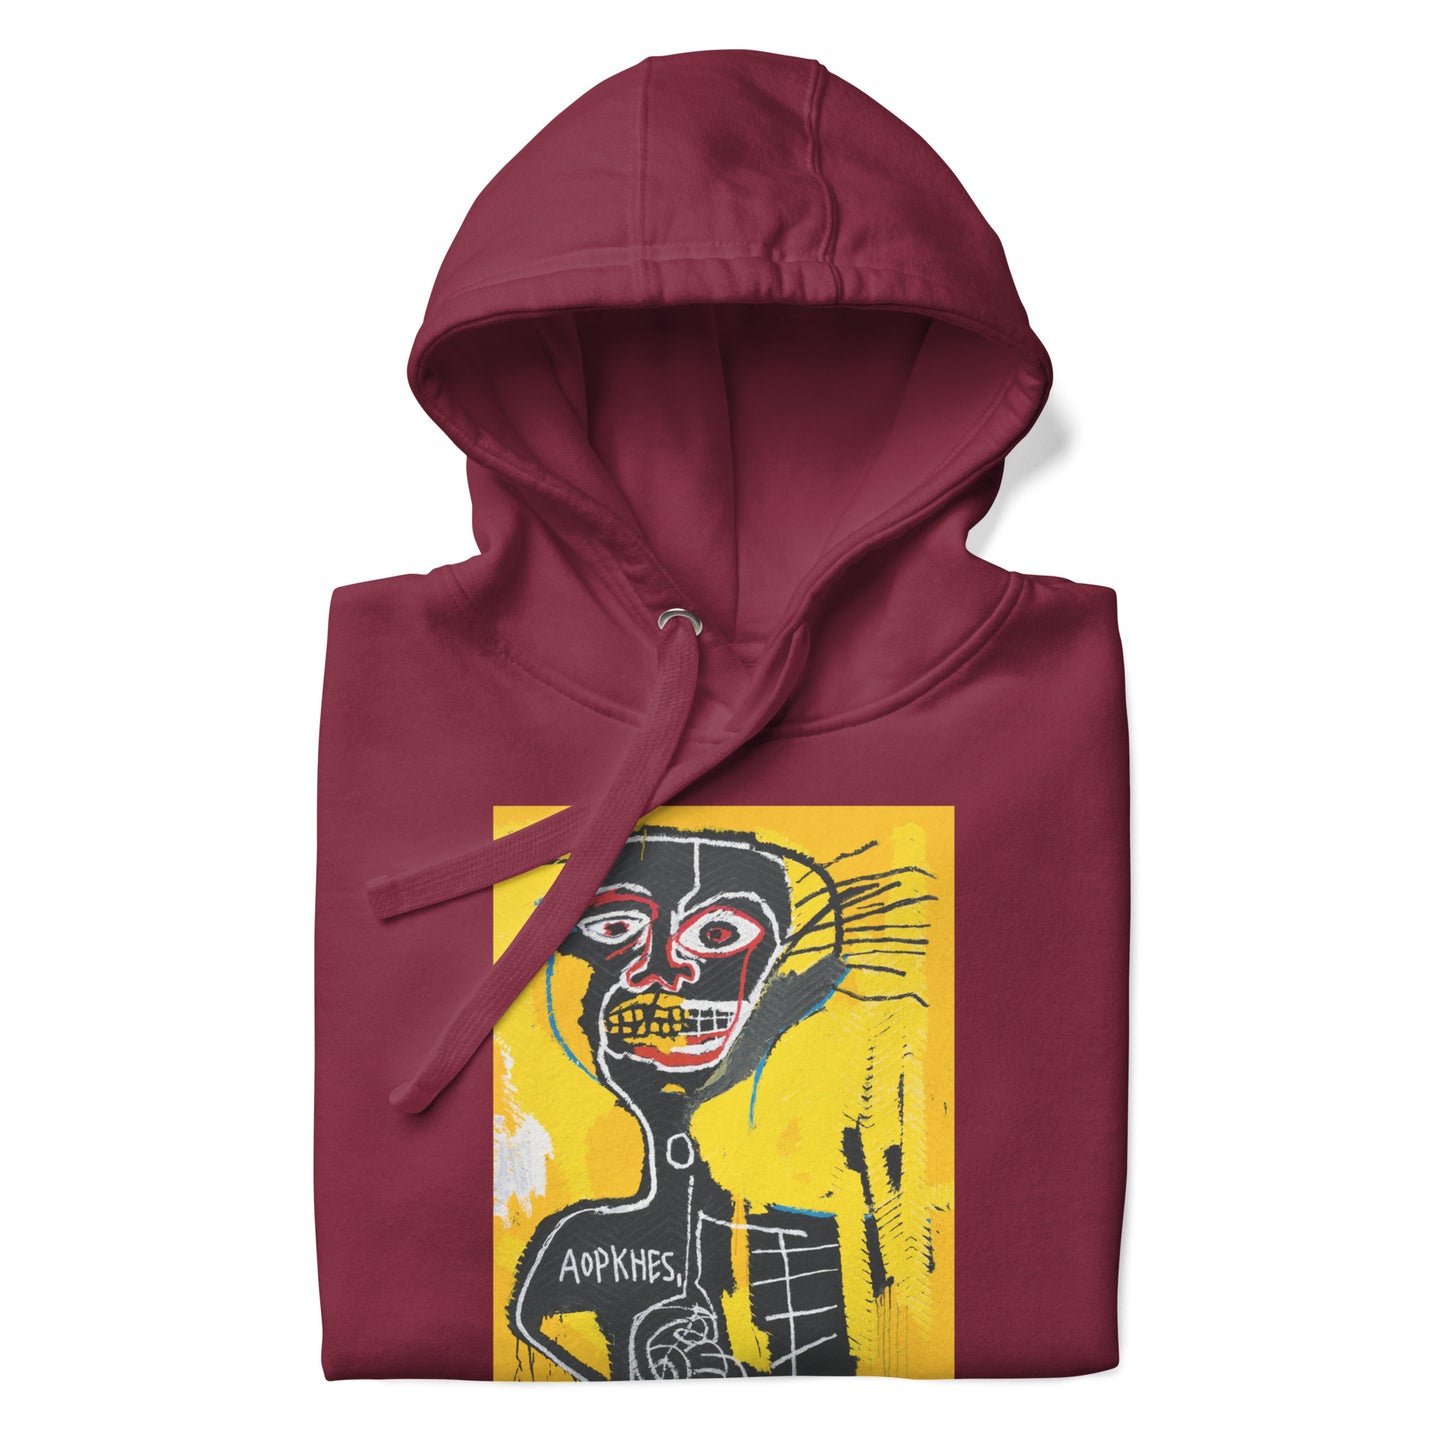 Jean-Michel Basquiat "Cabeza" Artwork Printed Premium Streetwear Sweatshirt Hoodie Burgundy Red